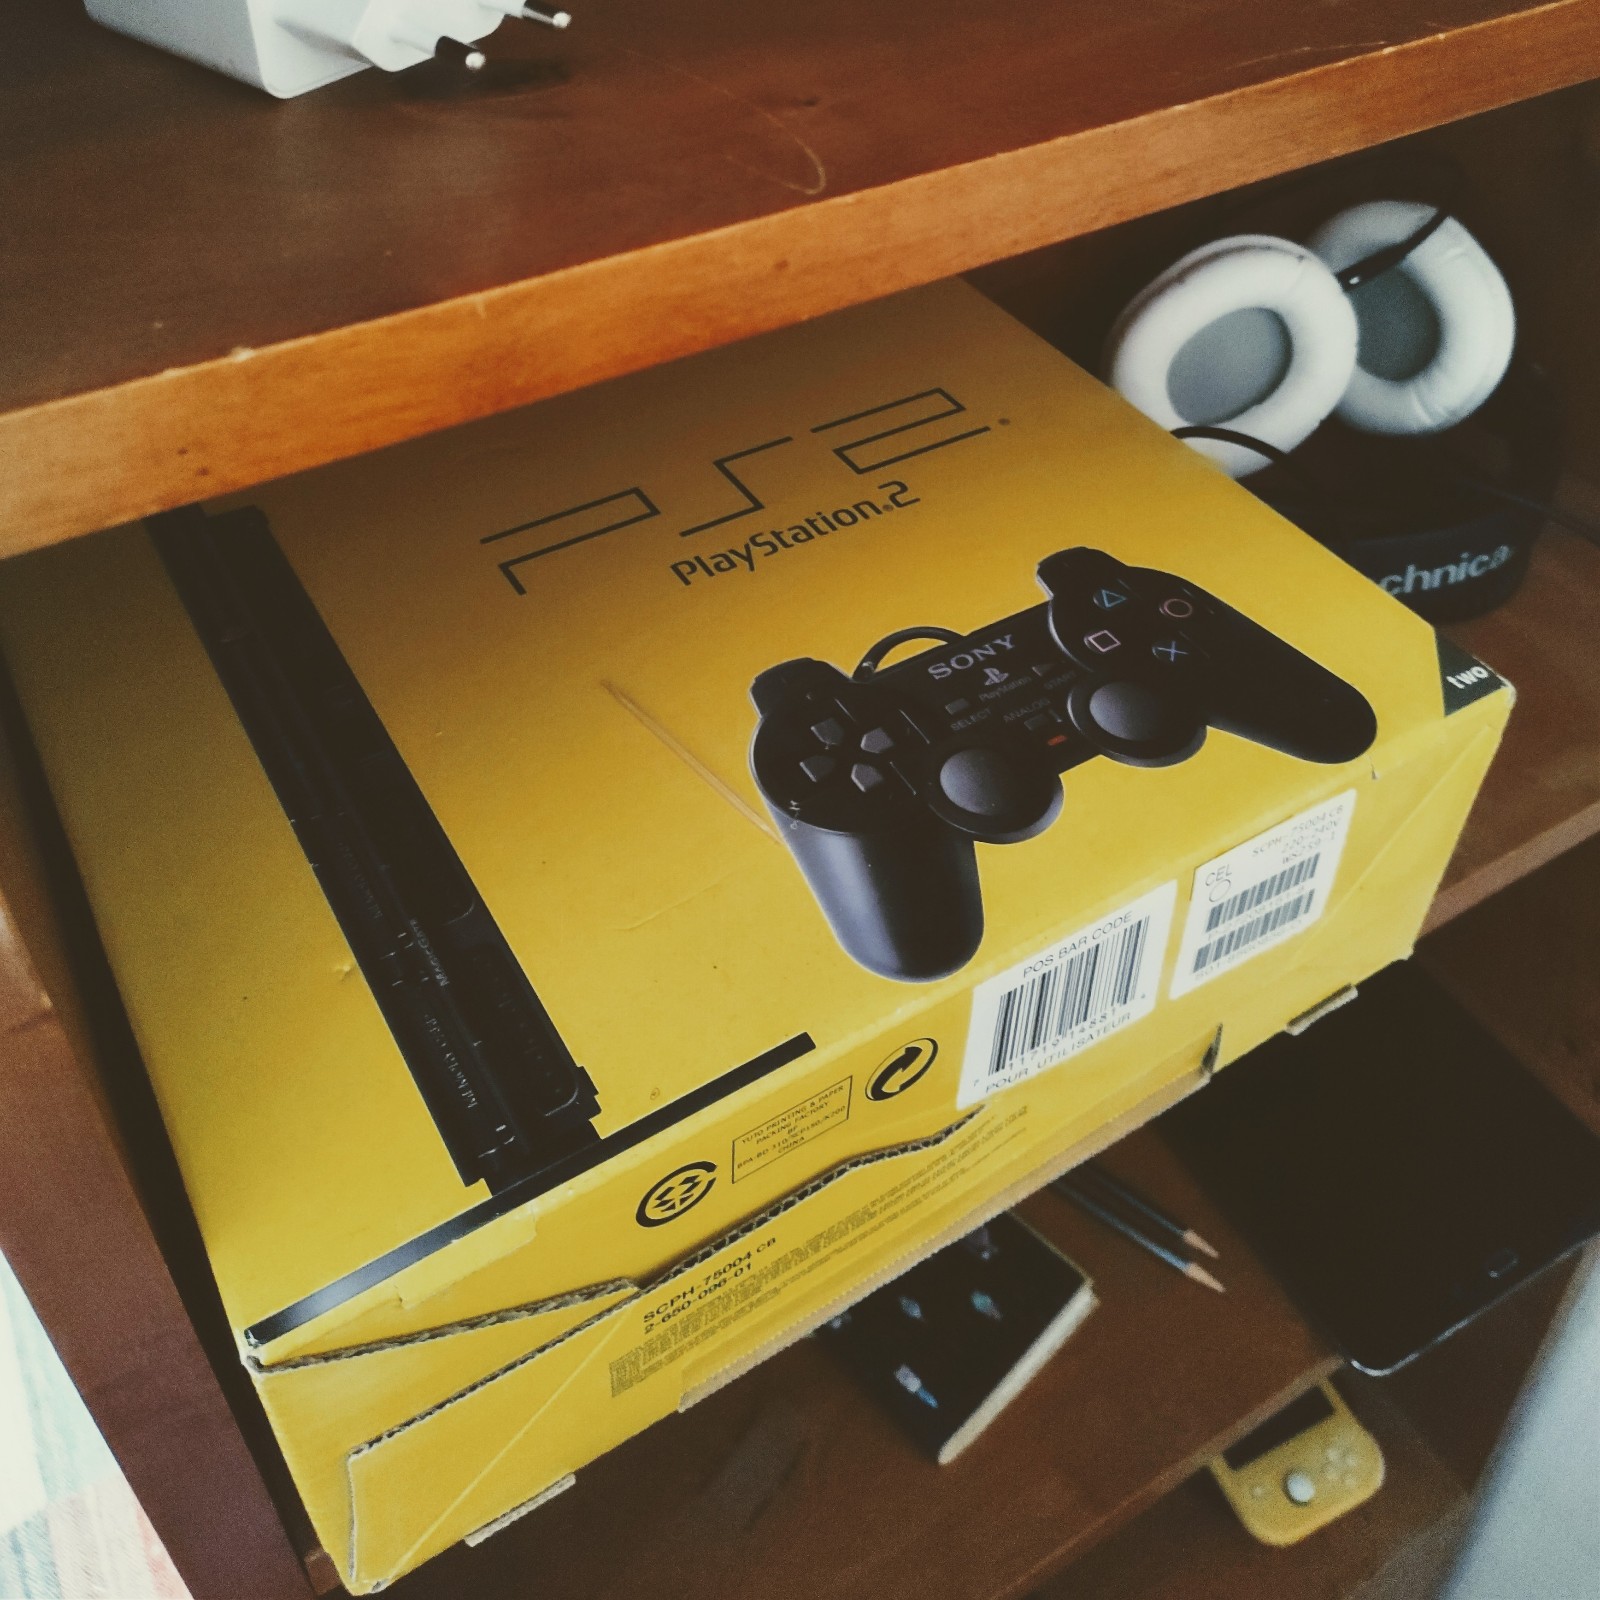 PS2-låda i bokhyllan